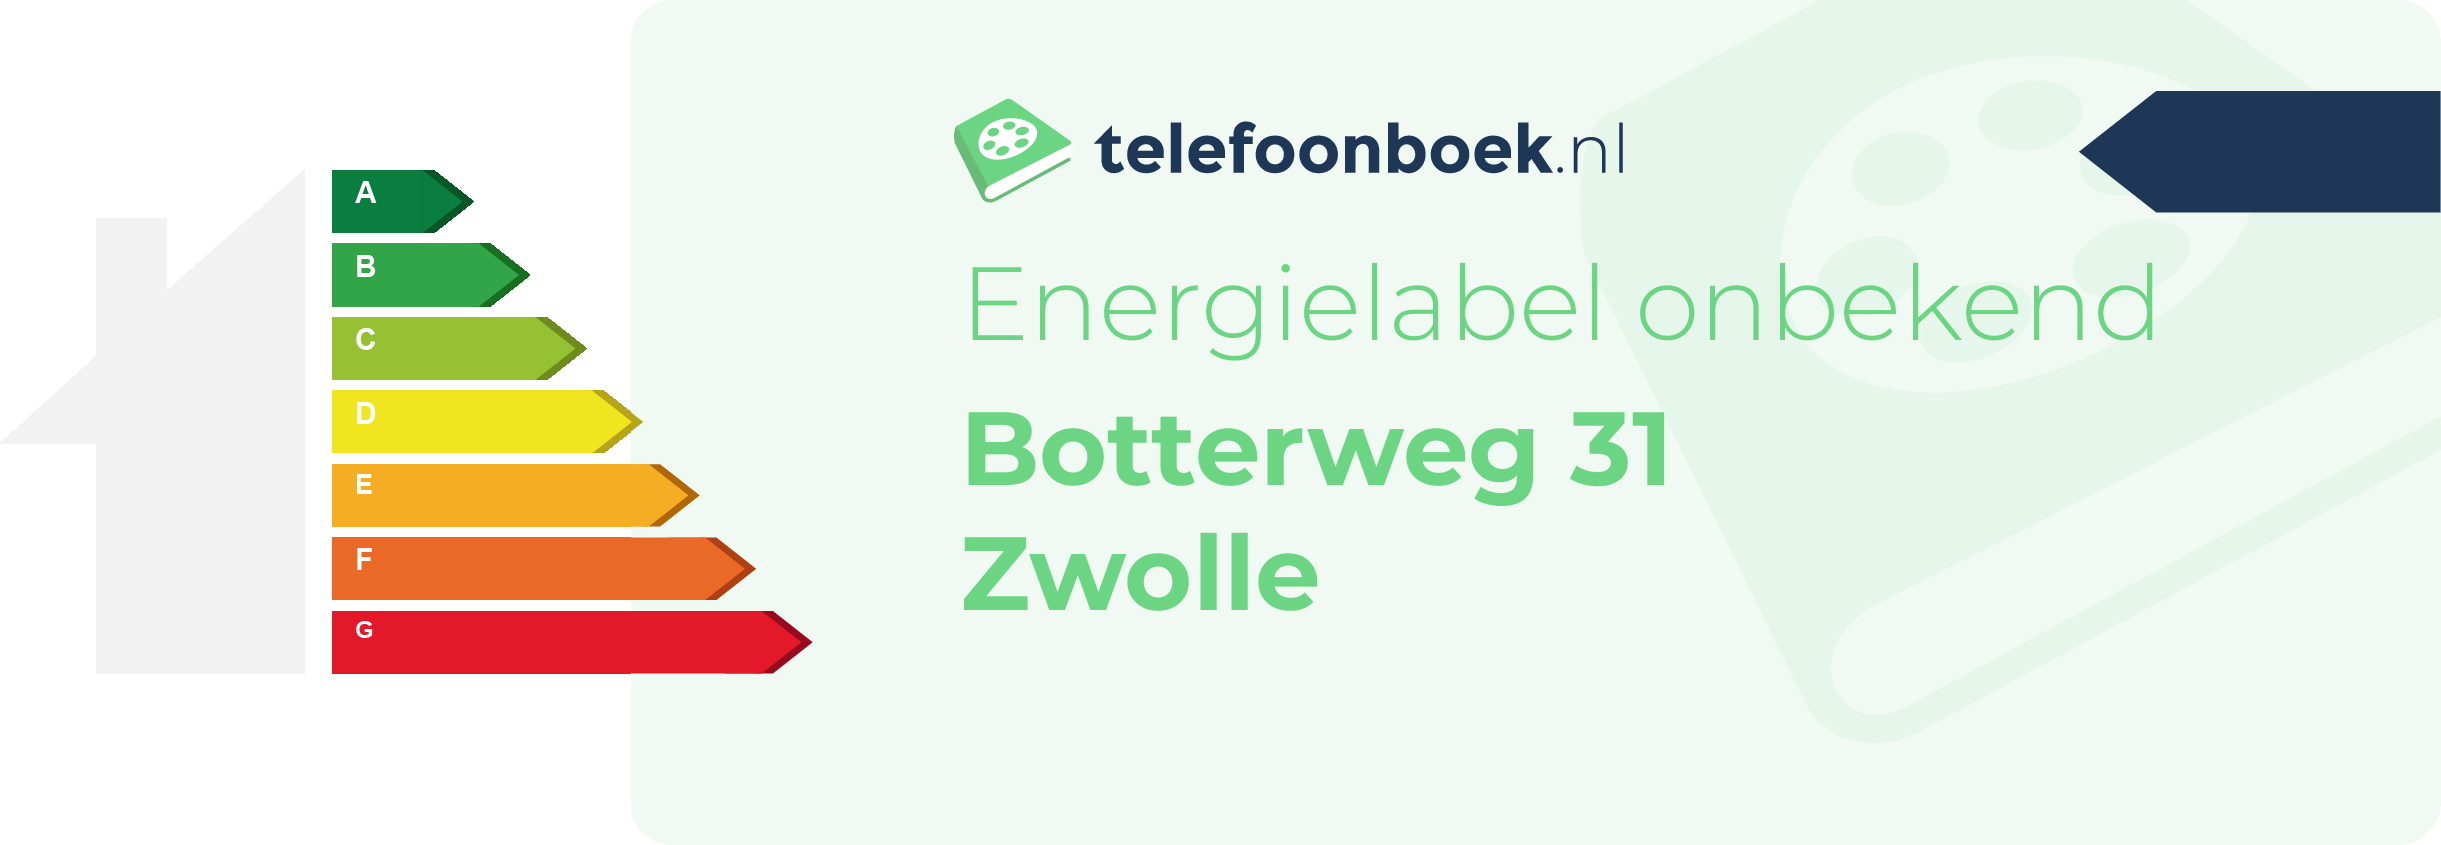 Energielabel Botterweg 31 Zwolle